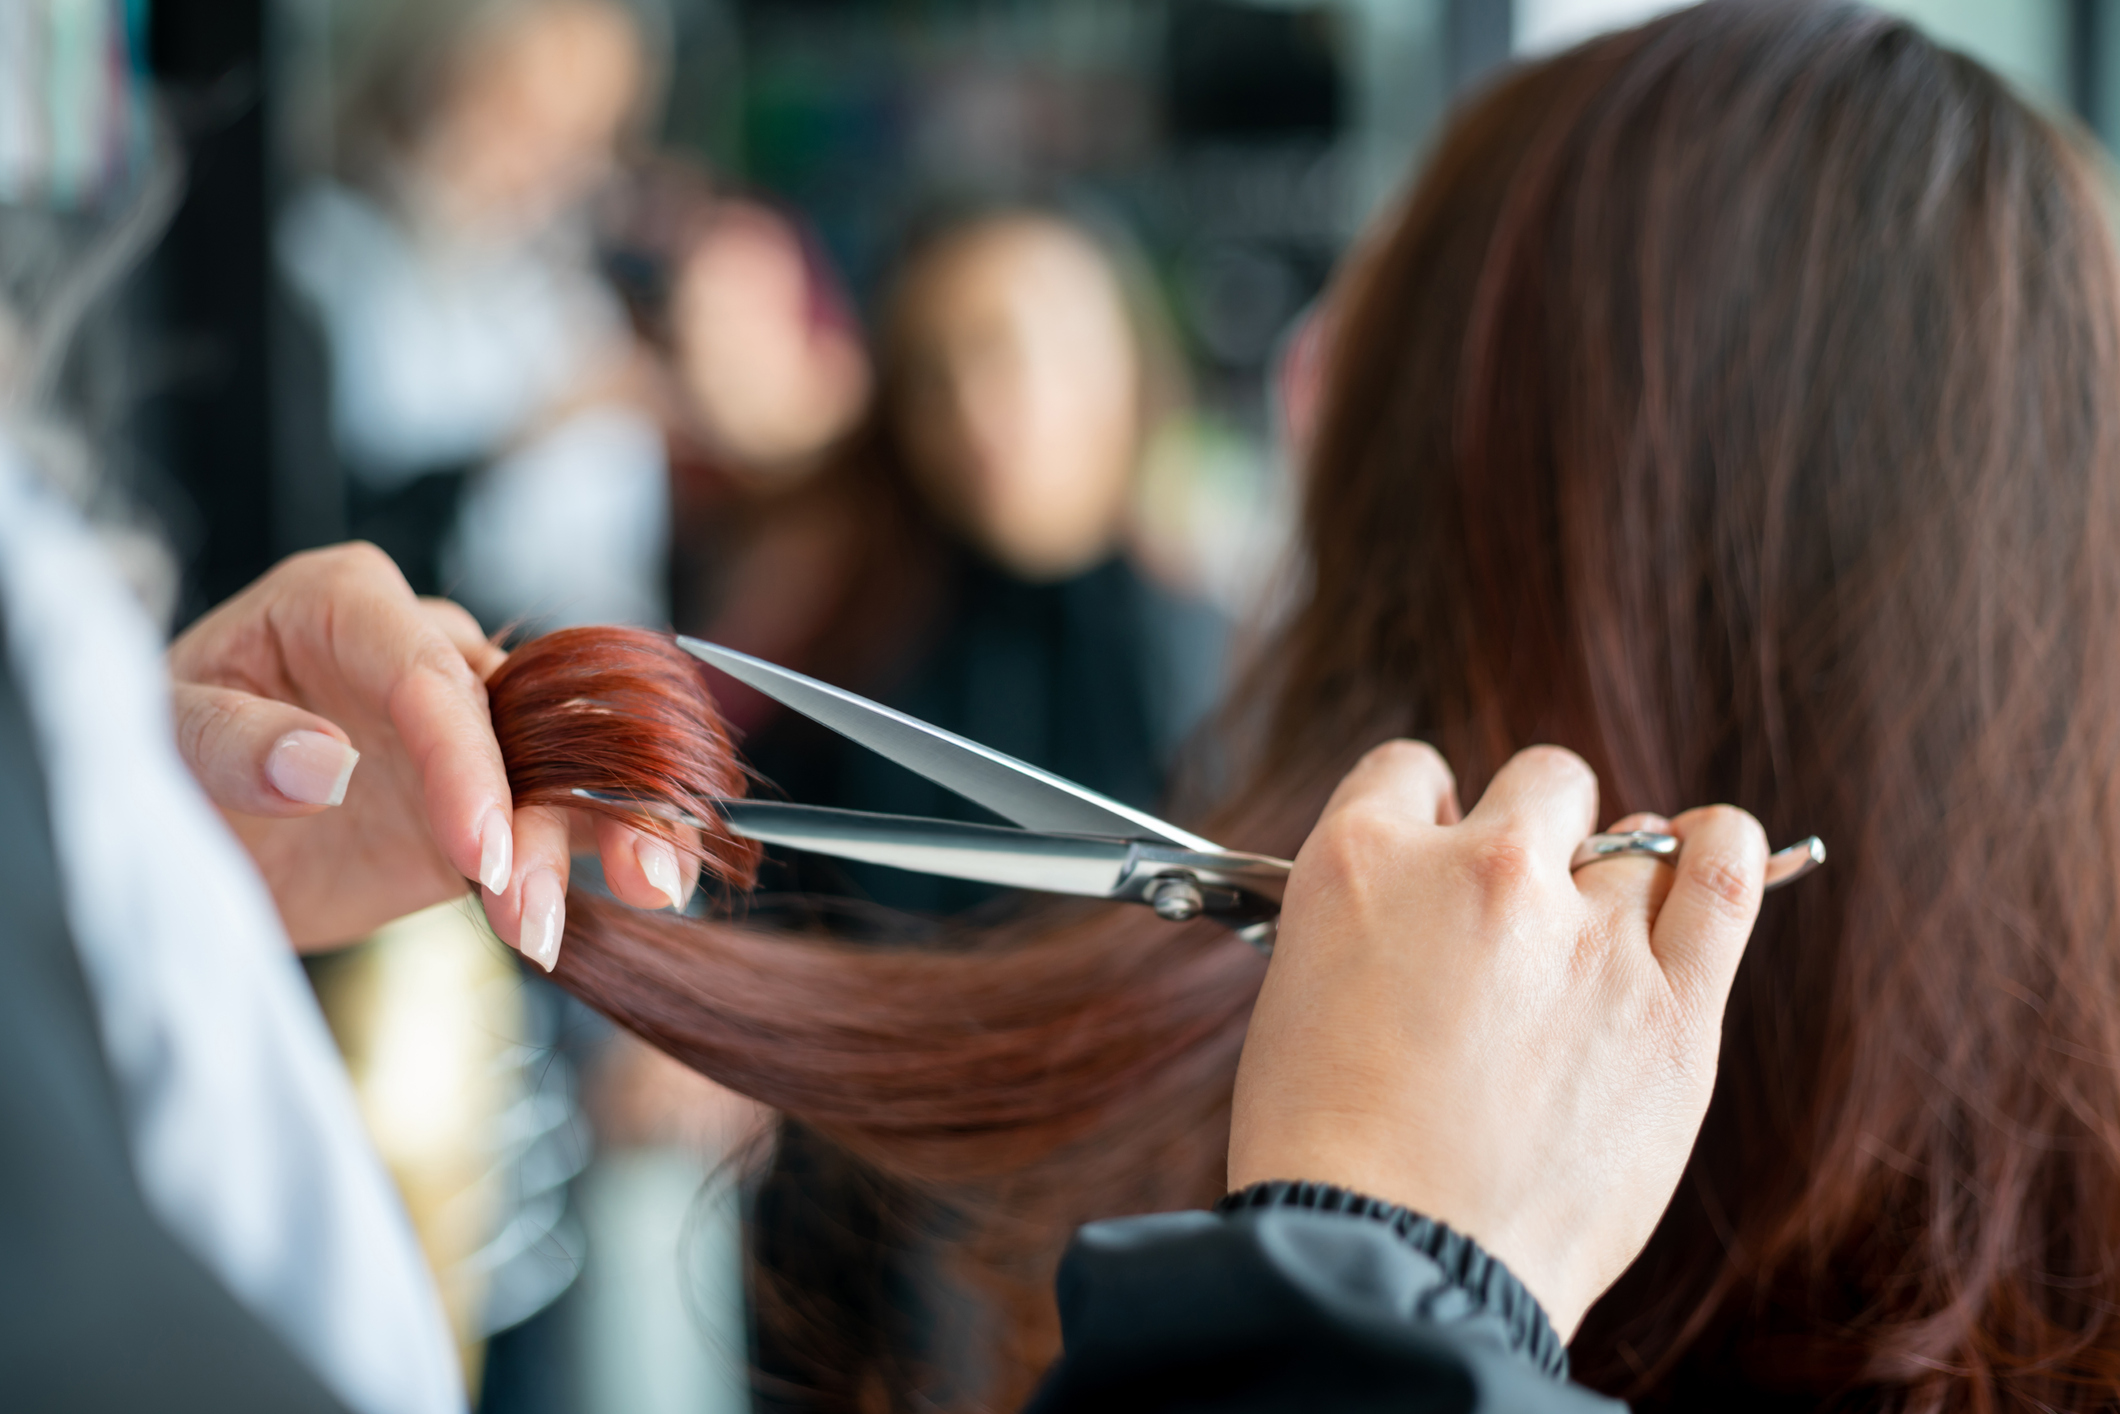 Close up of unrecognizable hairdresser cutting a female customerâs hair